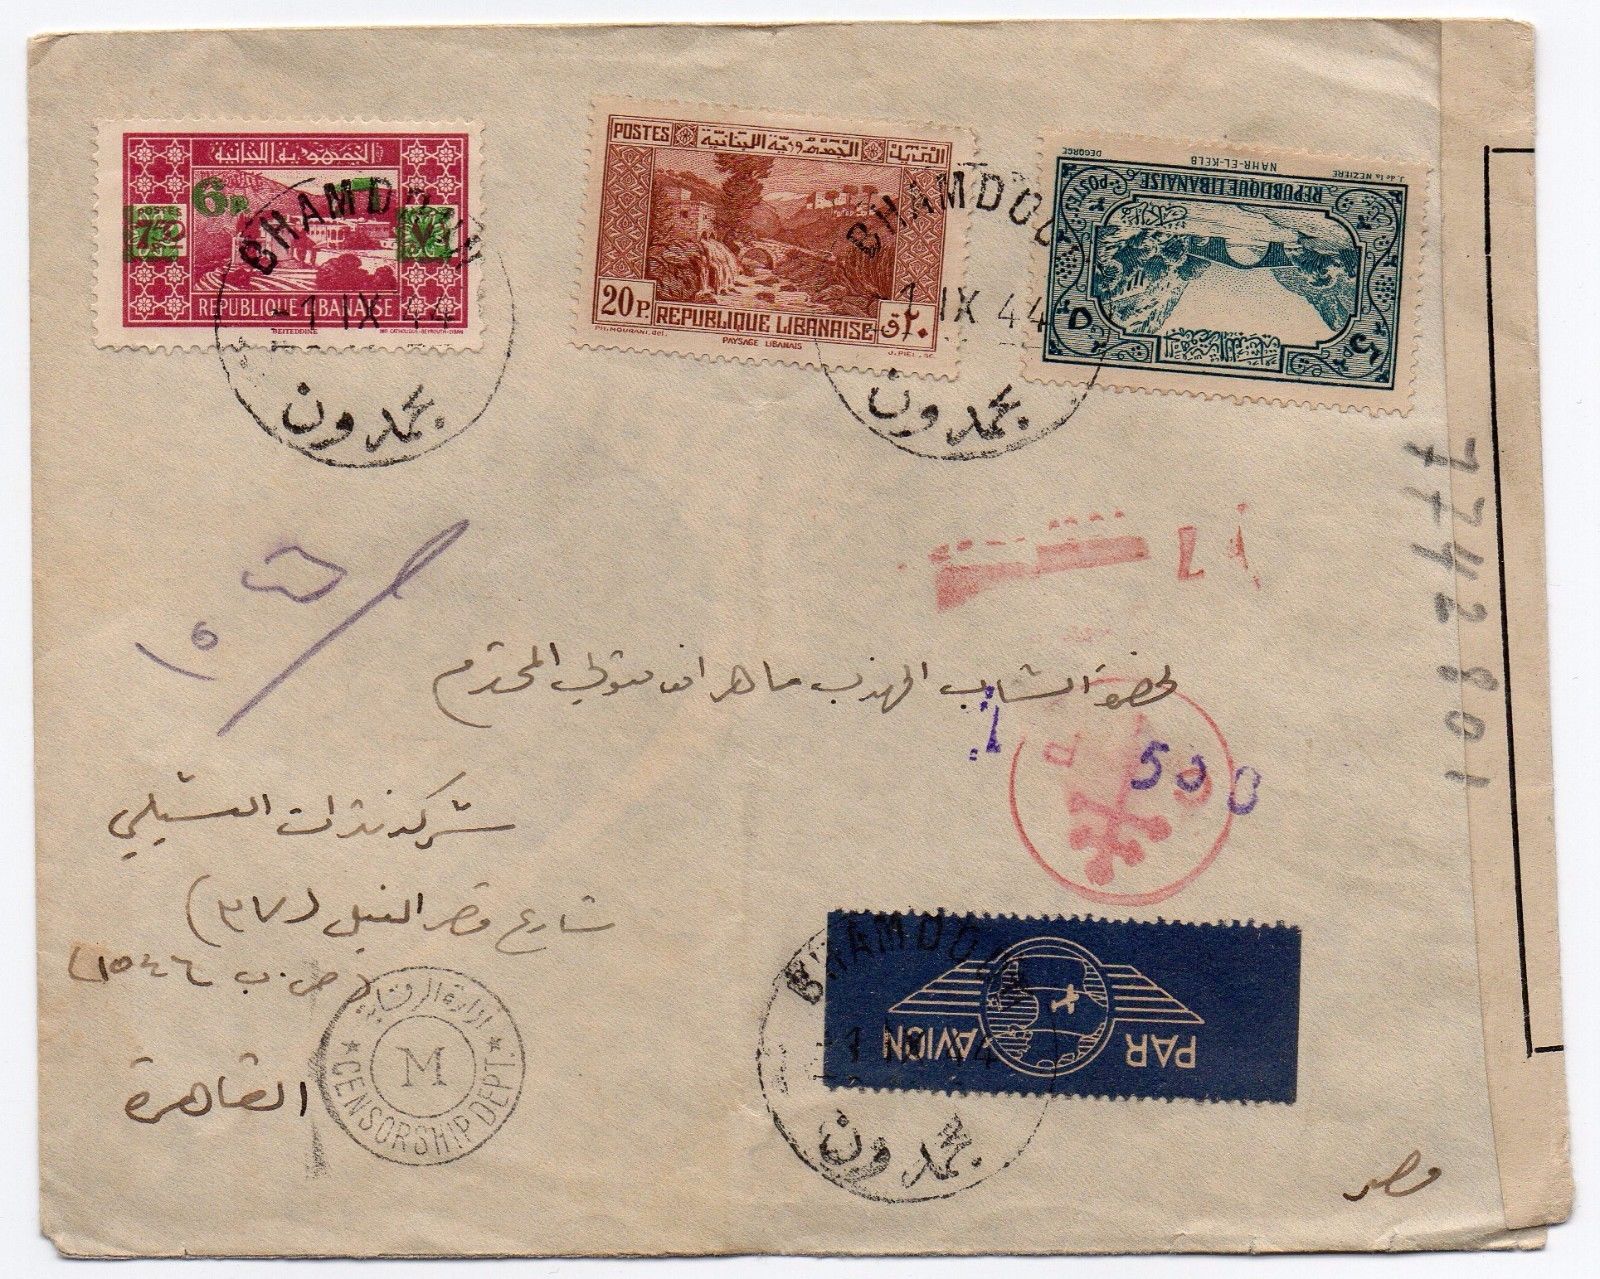 Lebanon: 1944 censored cover from Bhamdoun to Egypt